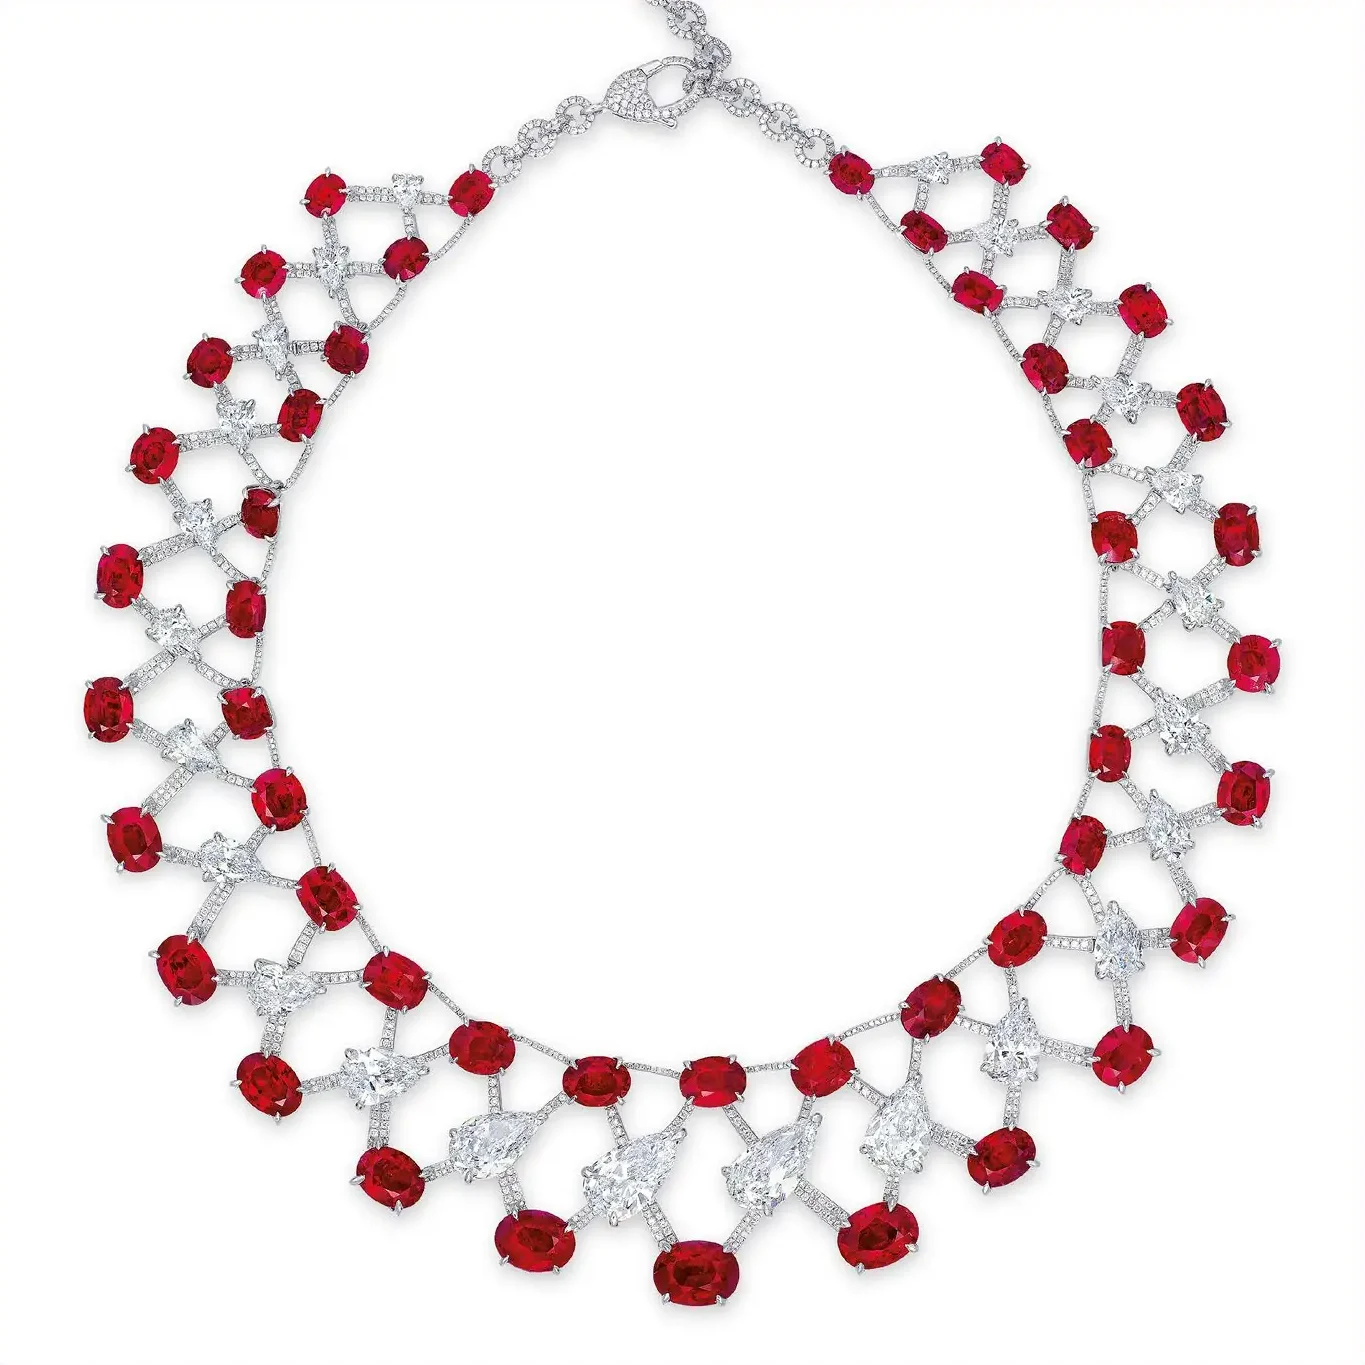 Etcetera's Burmese Ruby Necklace